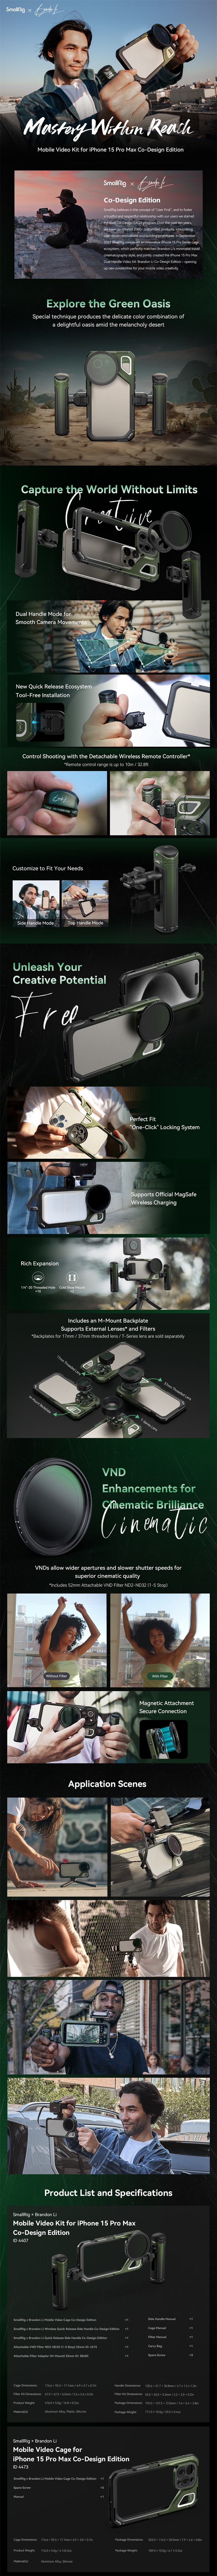 SmallRig x Brandon Li iPhone 15 Pro Max Video Kit Co Design